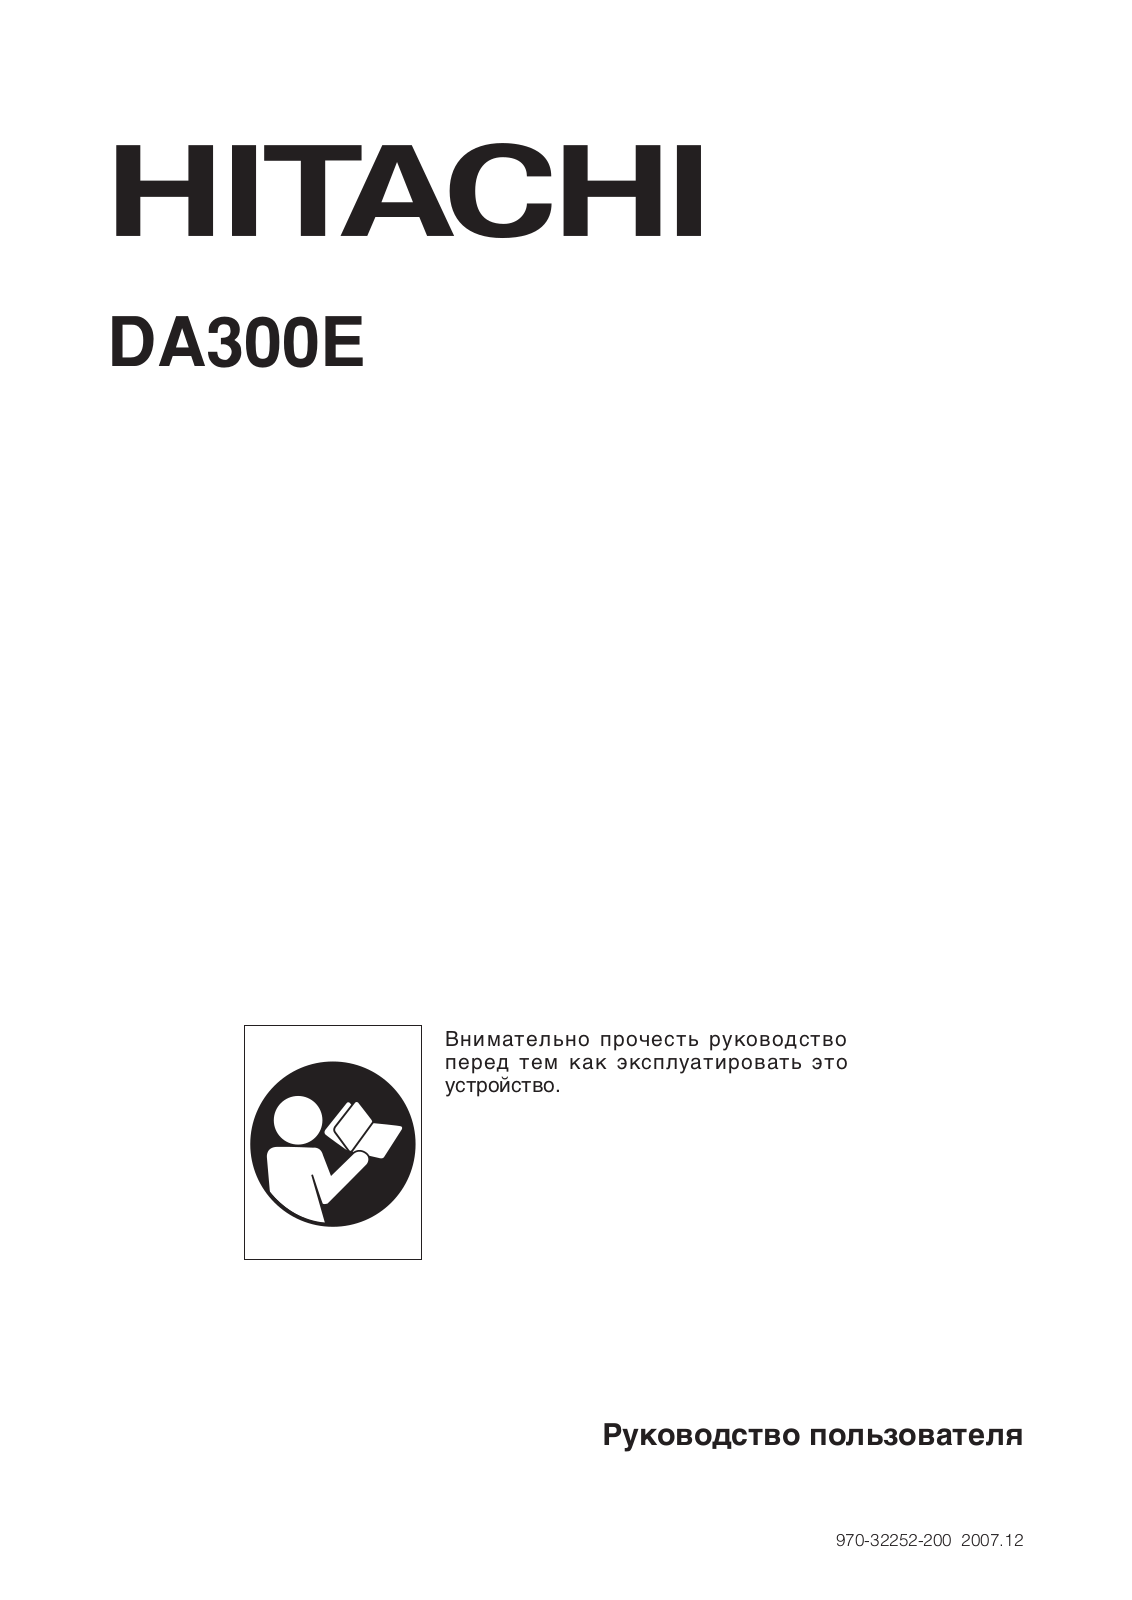 HITACHI DA300E User Manual